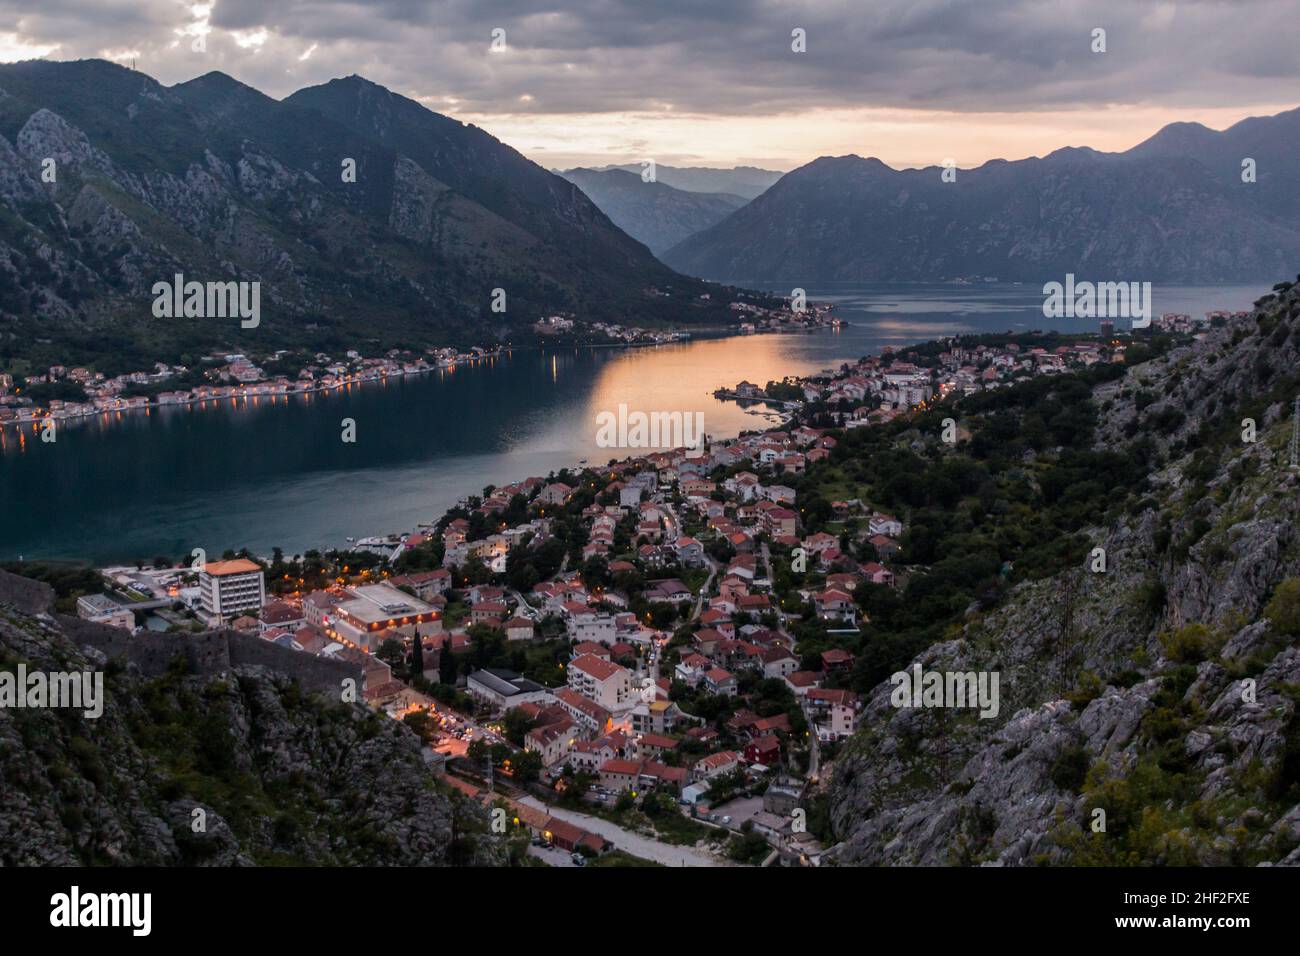 Sunset aerial view of Tabacina neighborhood of Kotor and the Bay of Kotor, Montenegro. Stock Photo